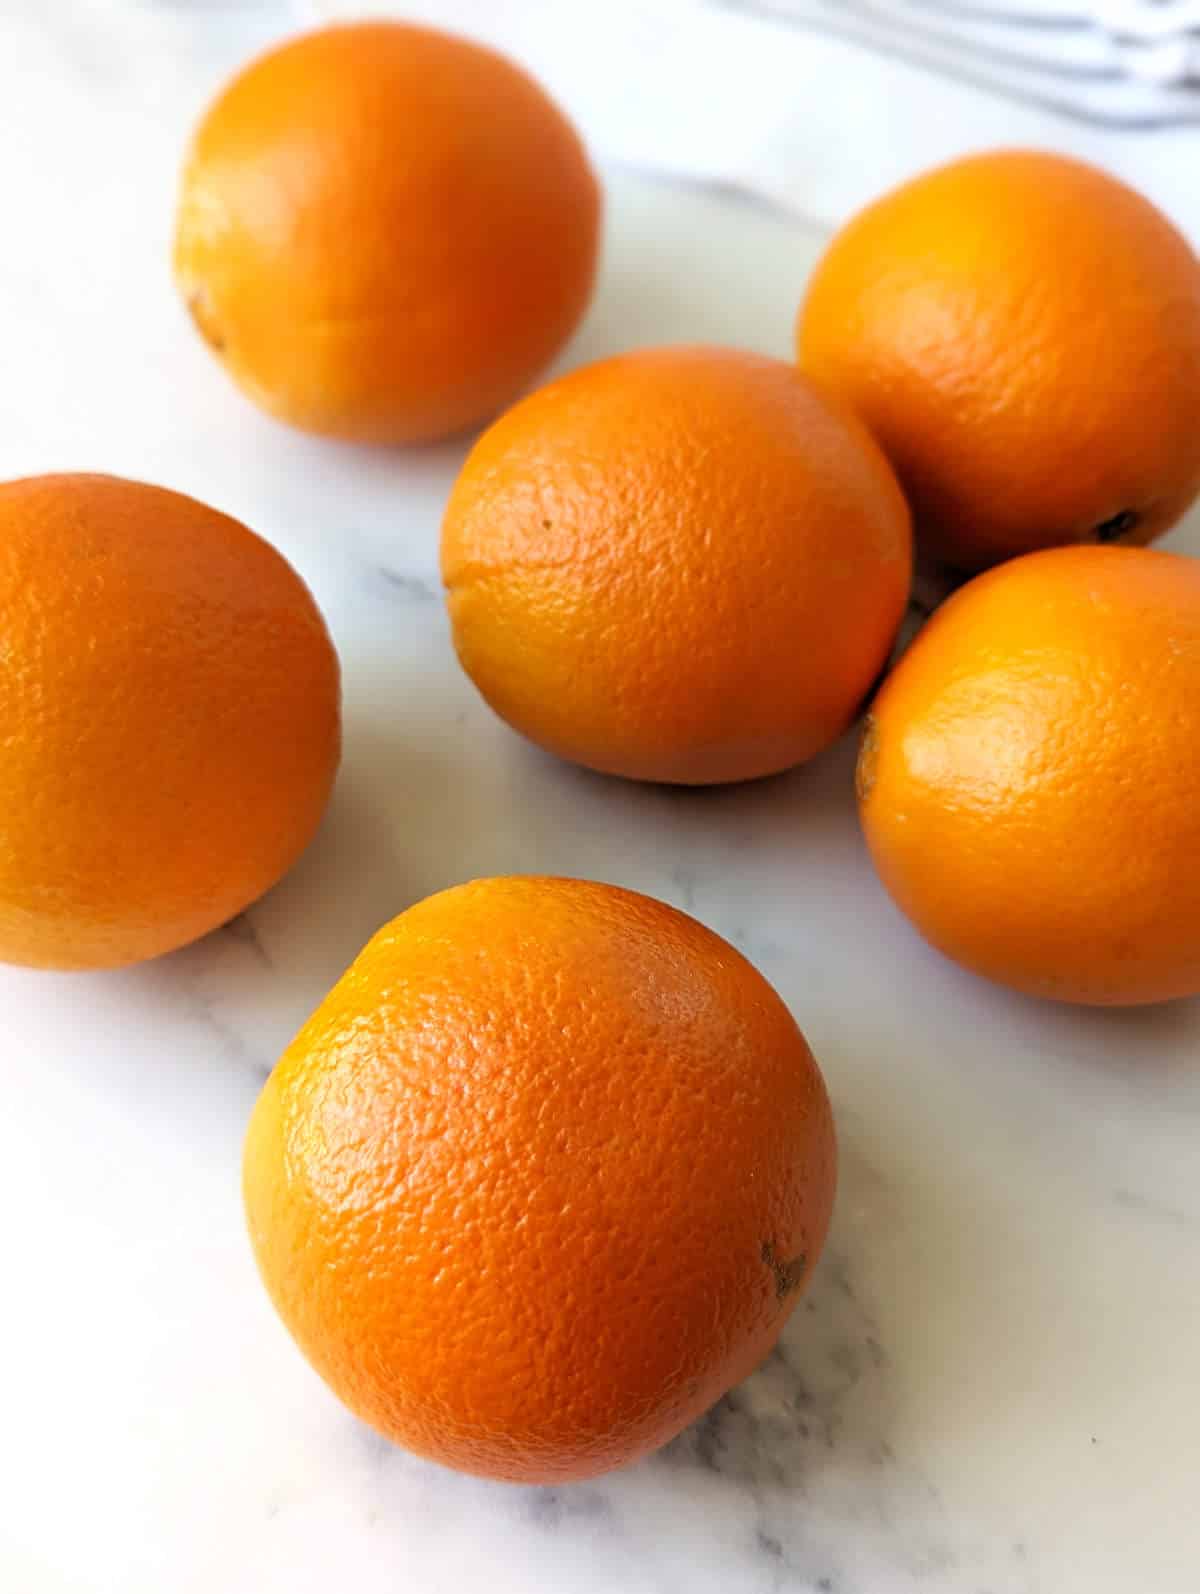 Several navel oranges on a light background.